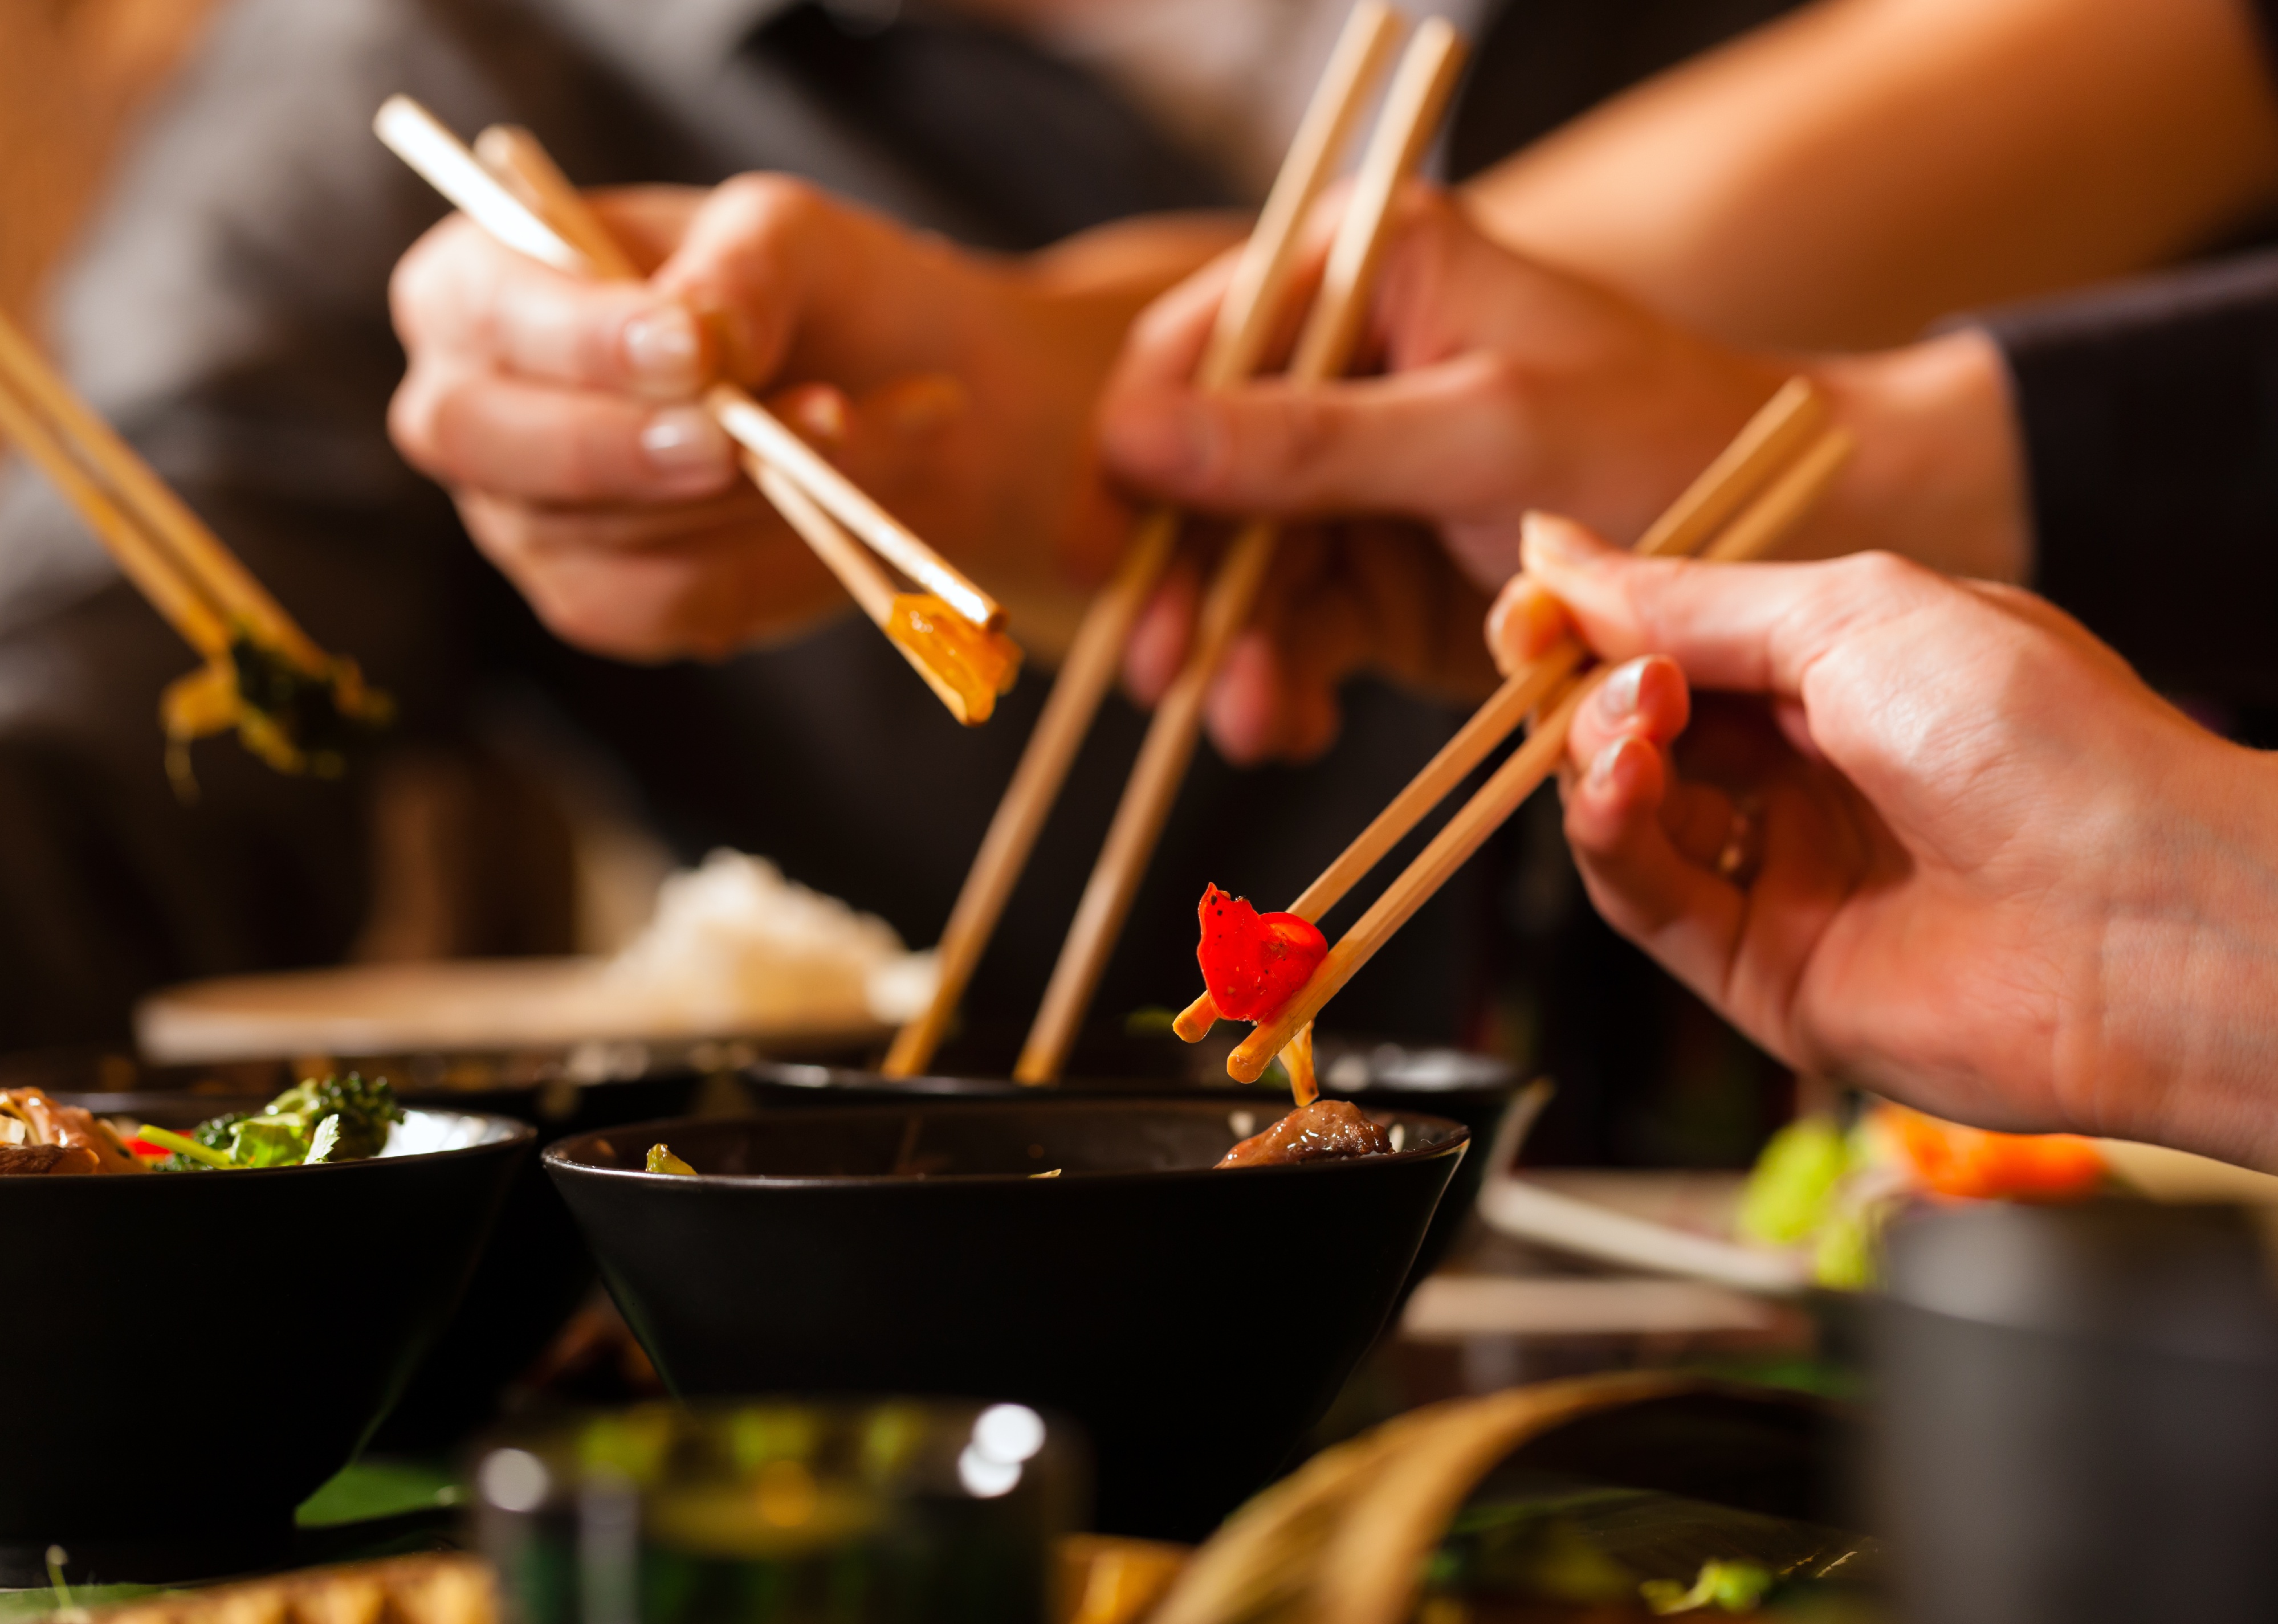 Highest-rated Asian restaurants in Dallas, according to Tripadvisor